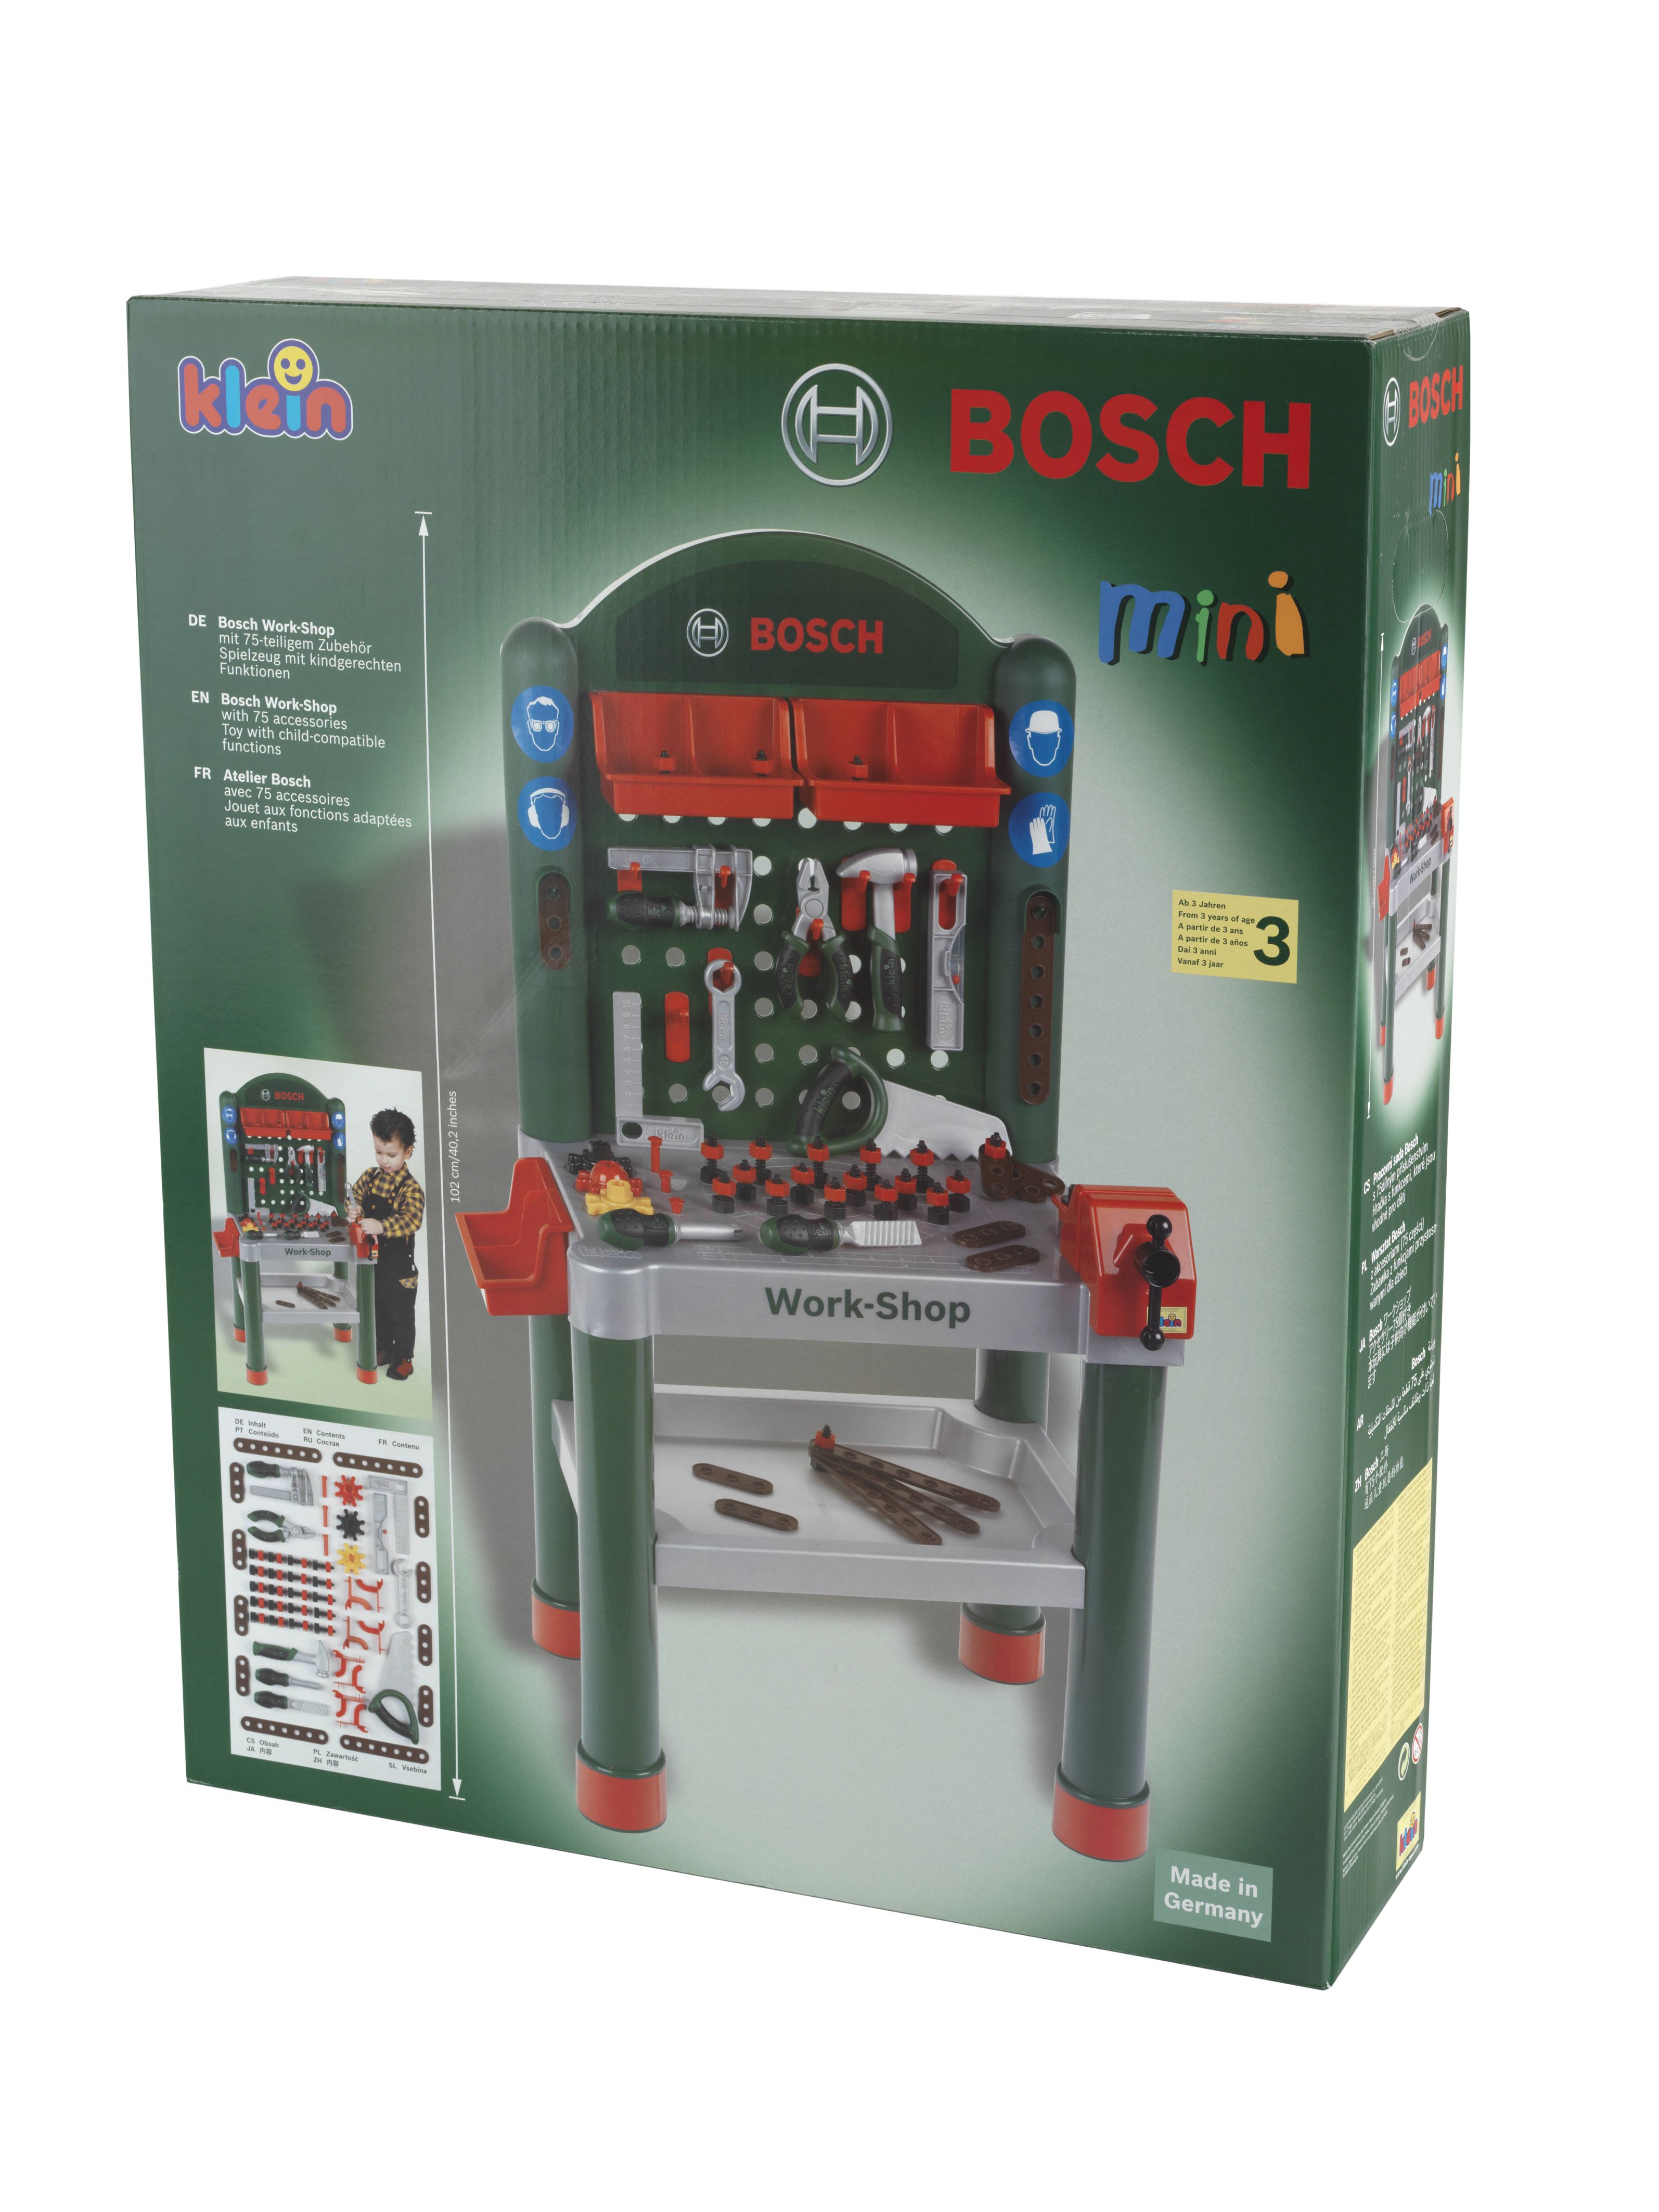 Bosch Workshop, 79 parts | Toys